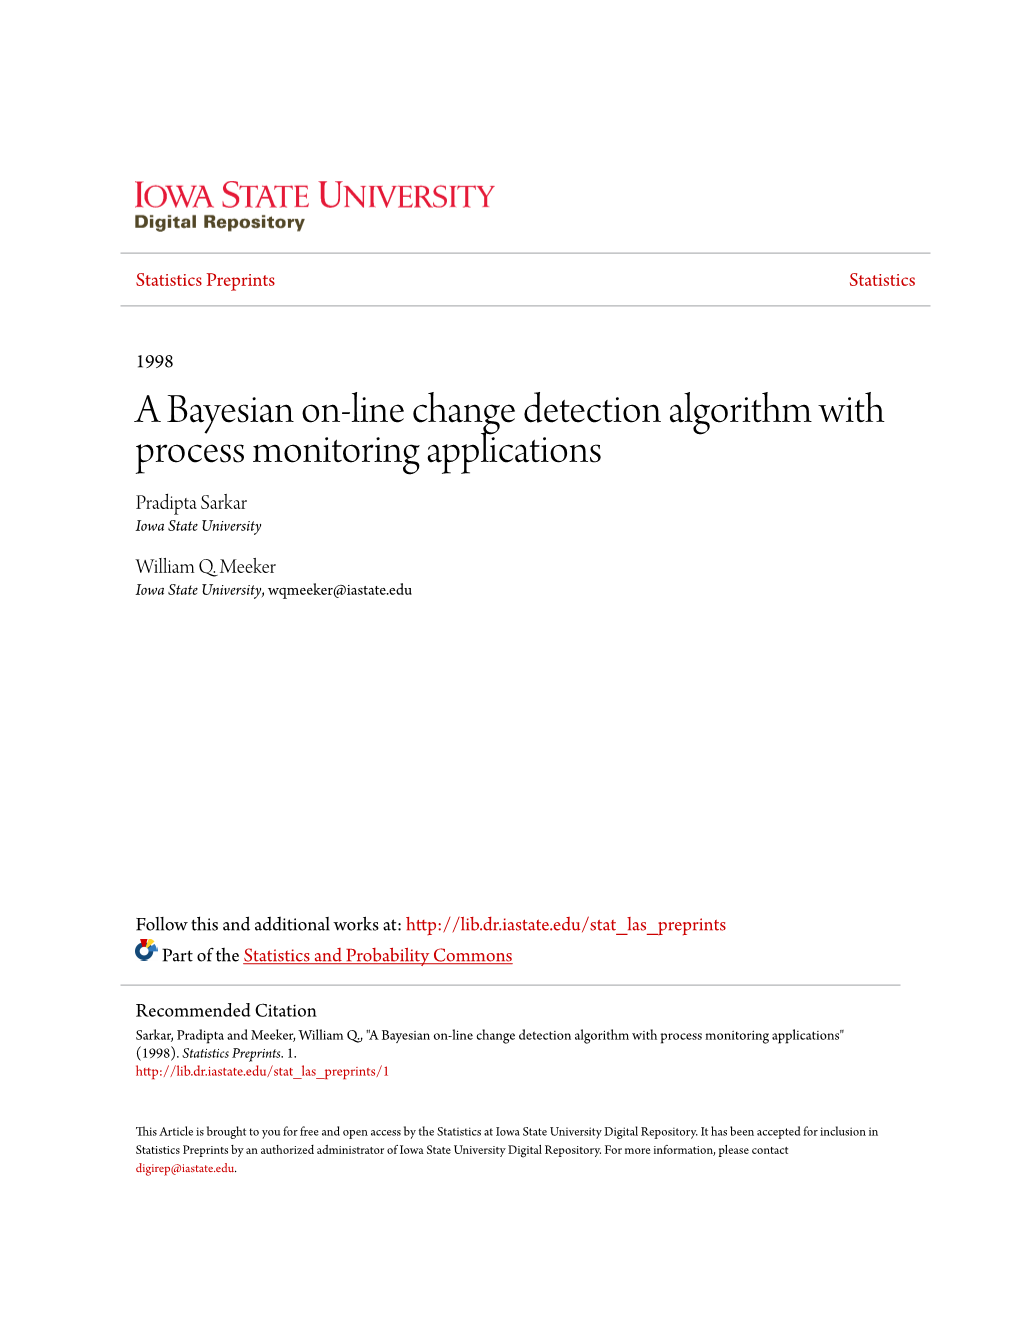 A Bayesian On-Line Change Detection Algorithm with Process Monitoring Applications Pradipta Sarkar Iowa State University